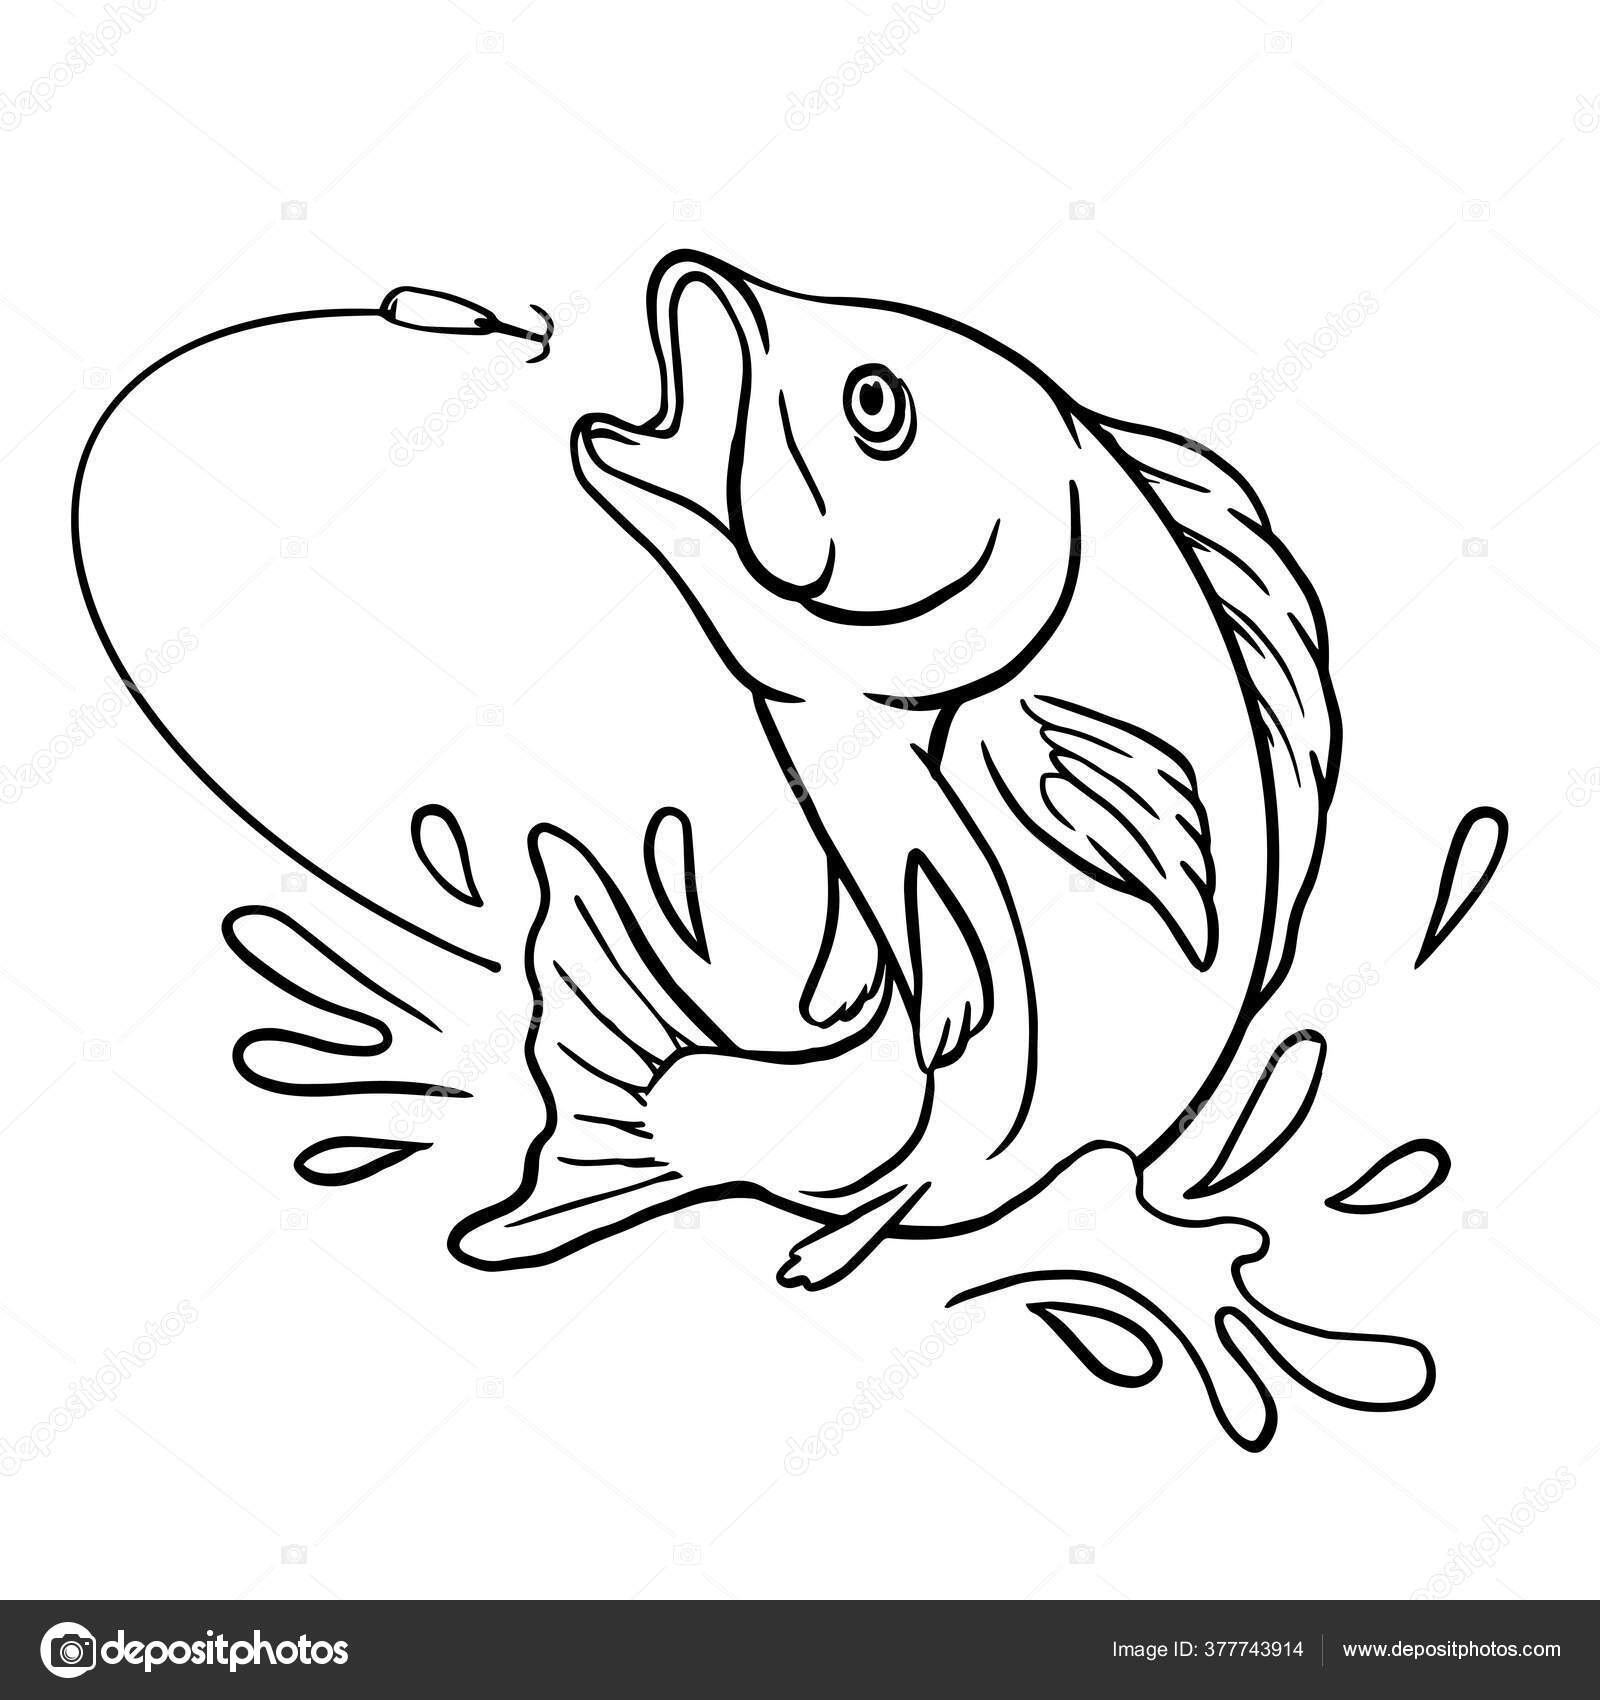 https://st4.depositphotos.com/18681072/37774/v/1600/depositphotos_377743914-stock-illustration-fishing-outline-drawing-fish-jump.jpg